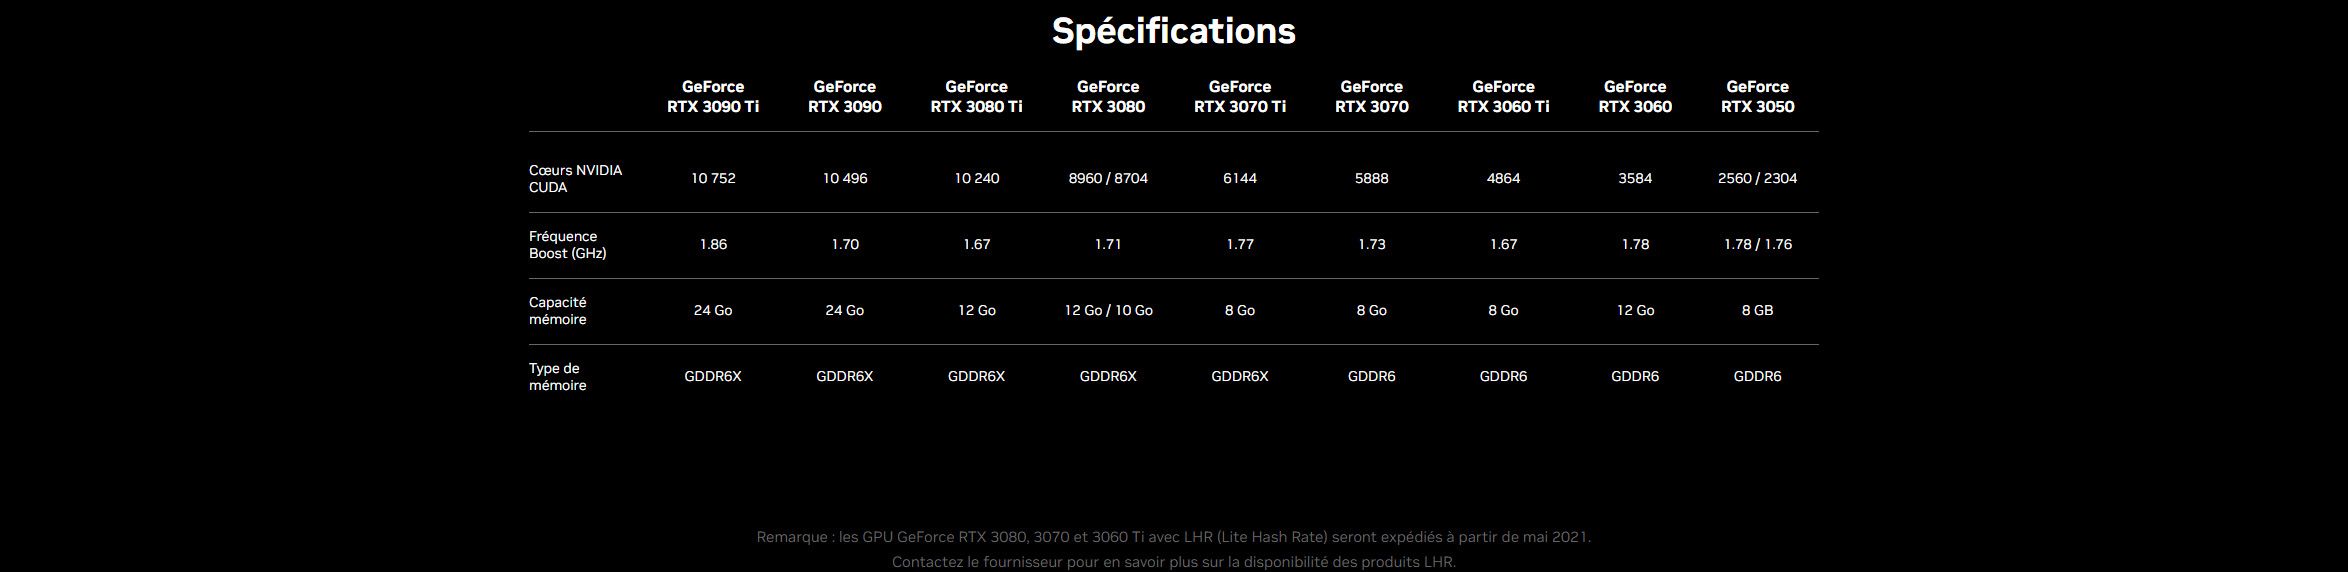 Specifications Nvidia